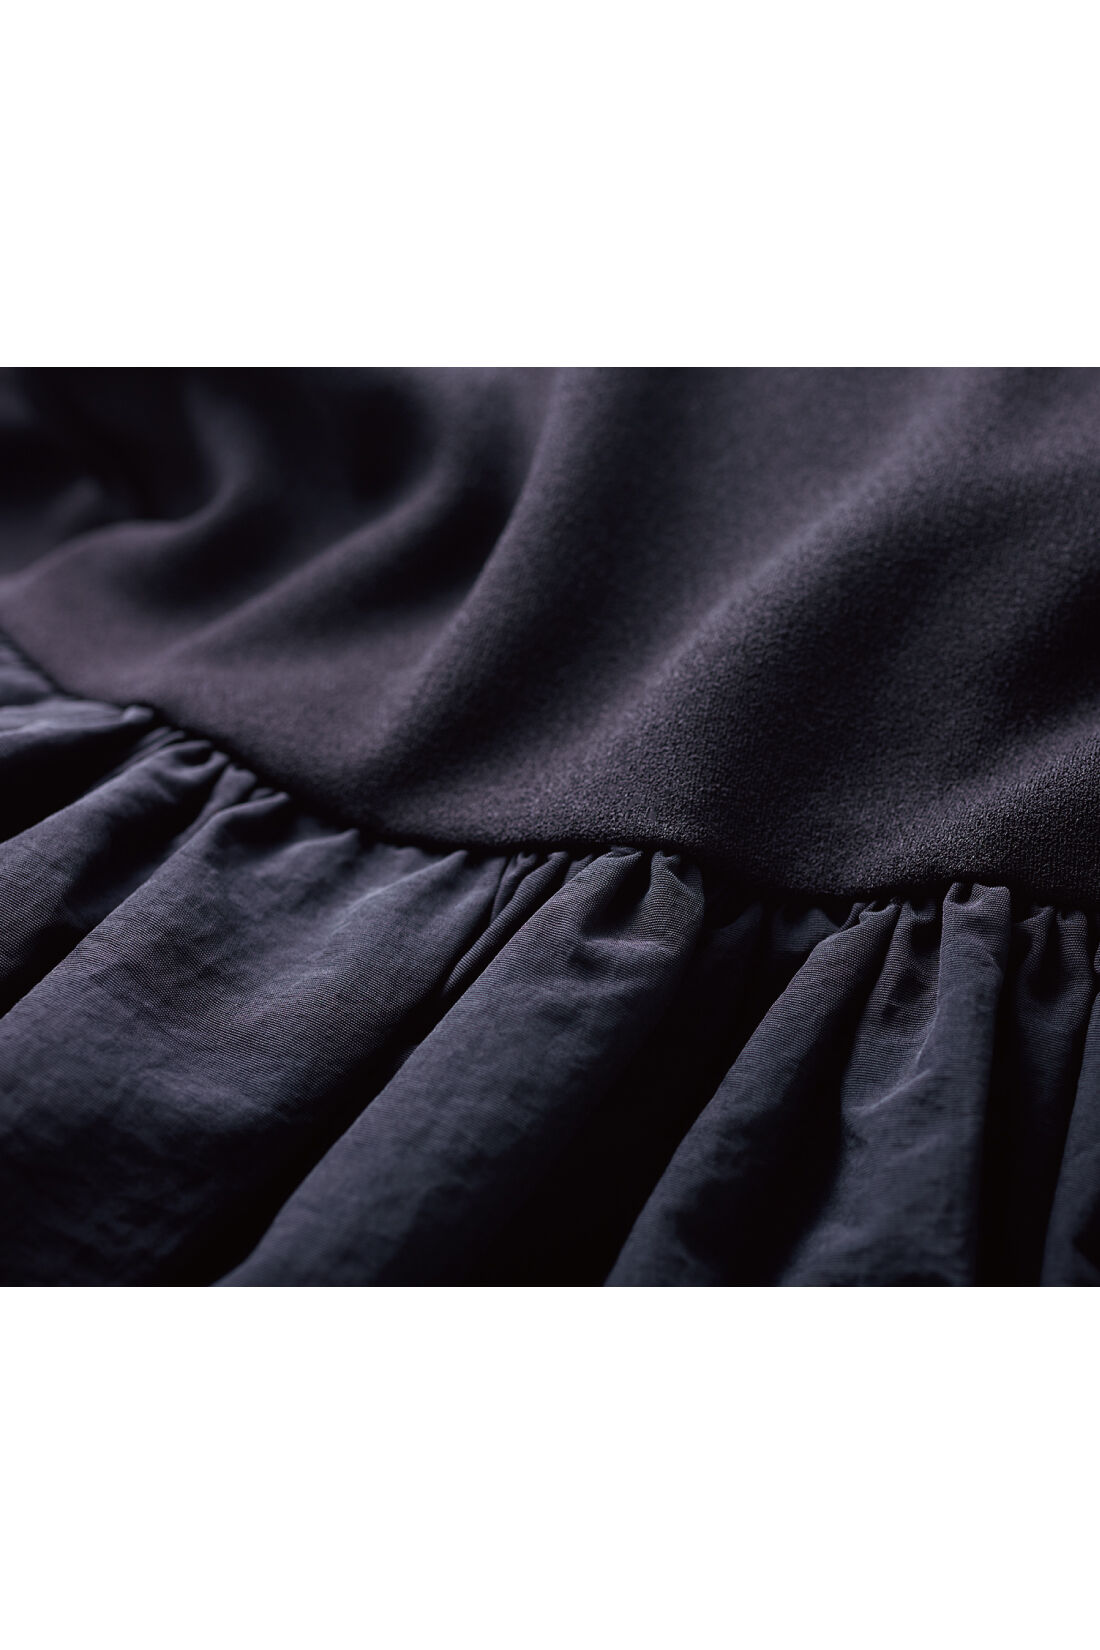 MEDE19F|MEDE19F×SCREEN KAORI　ドッキングワンピース＆ファーカフス〈ブラック〉|トップス部分はマットなカットソージョゼット。スカート部分はドライな感触のナイロン素材。